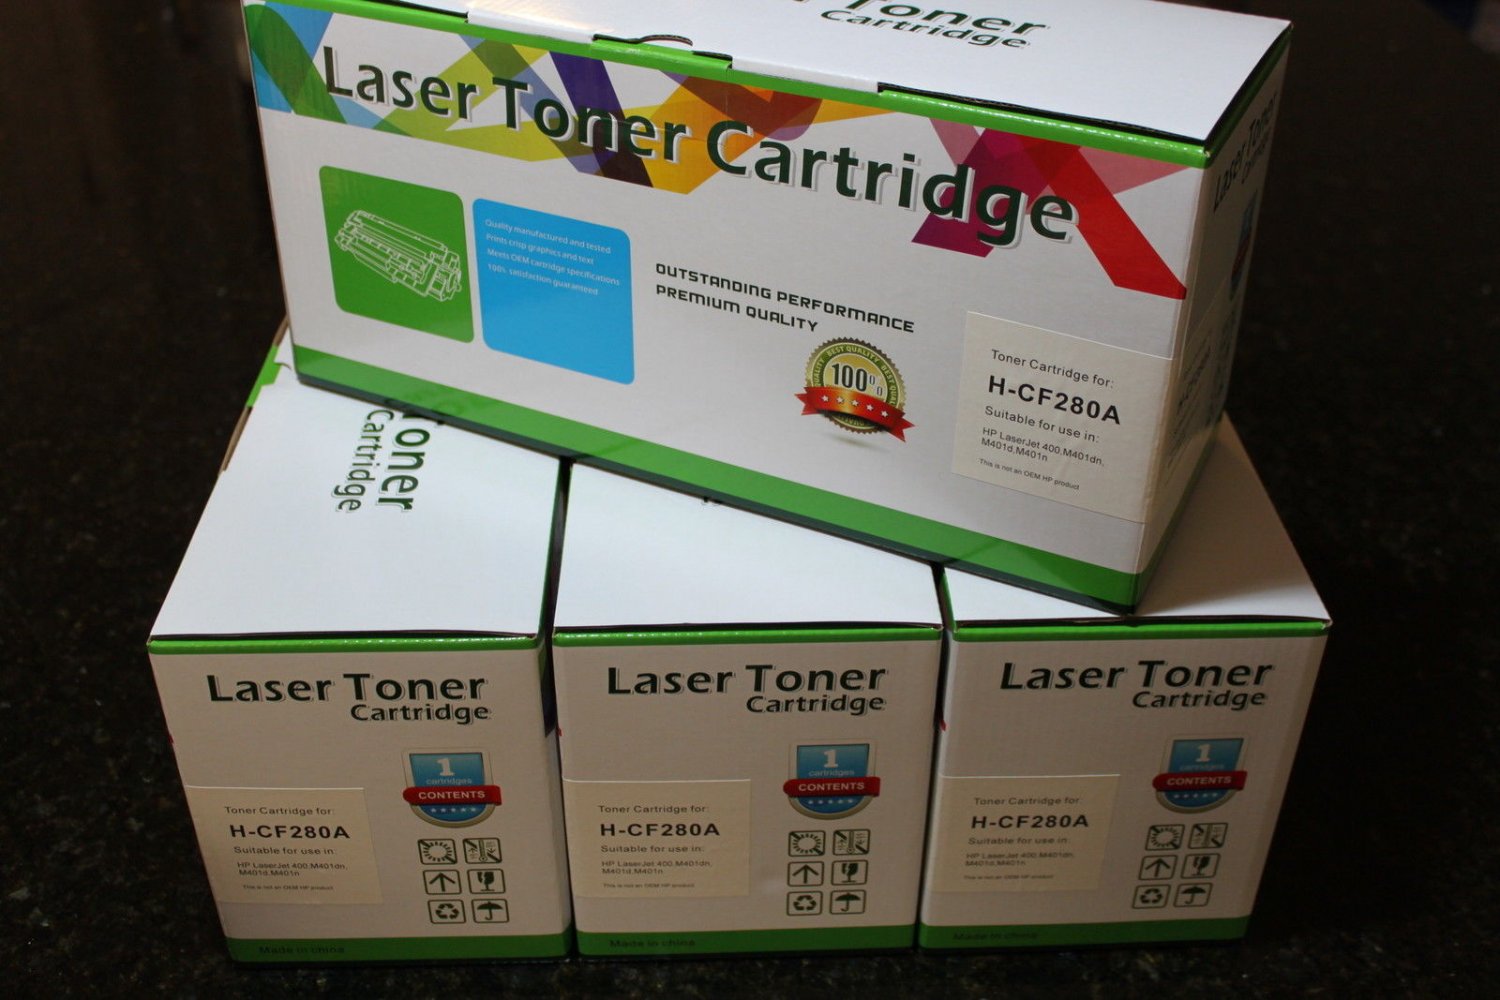 4 Toner 80A CF280A Cartridge for HP LaserJet Pro 400 Series Printer M401 M425 dn